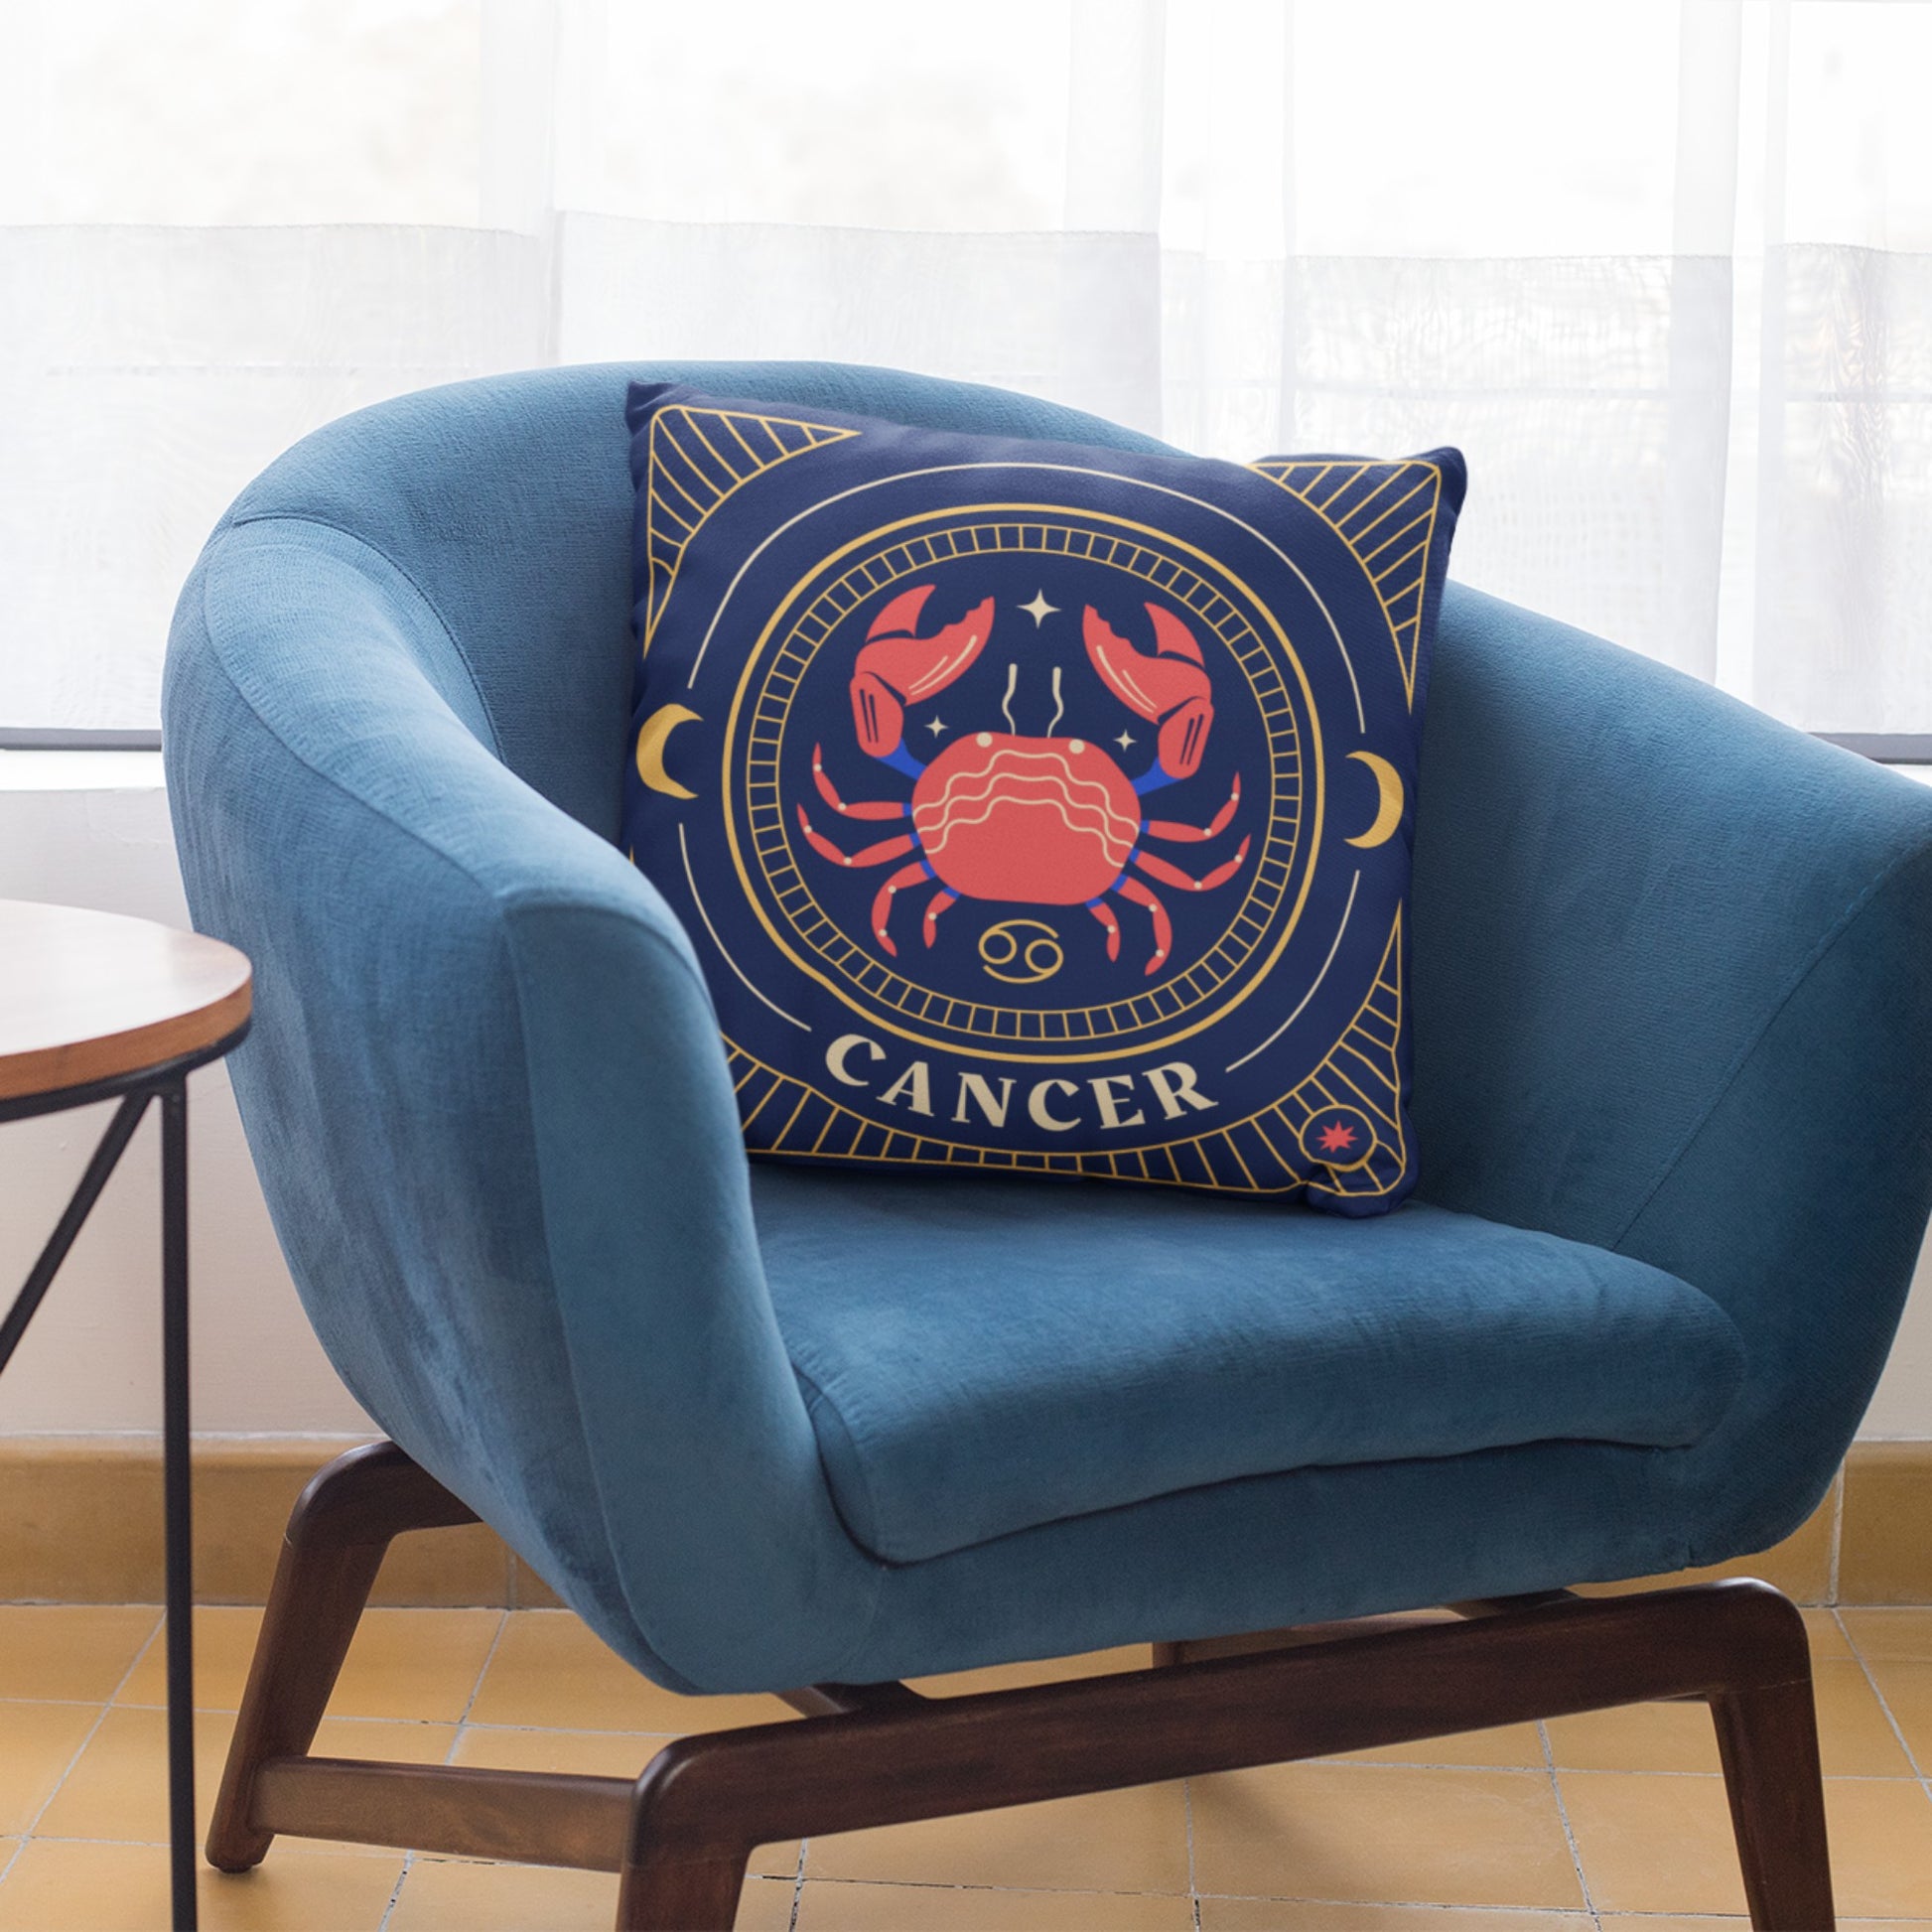 Zodiac-inspired Cancer Throw Pillow